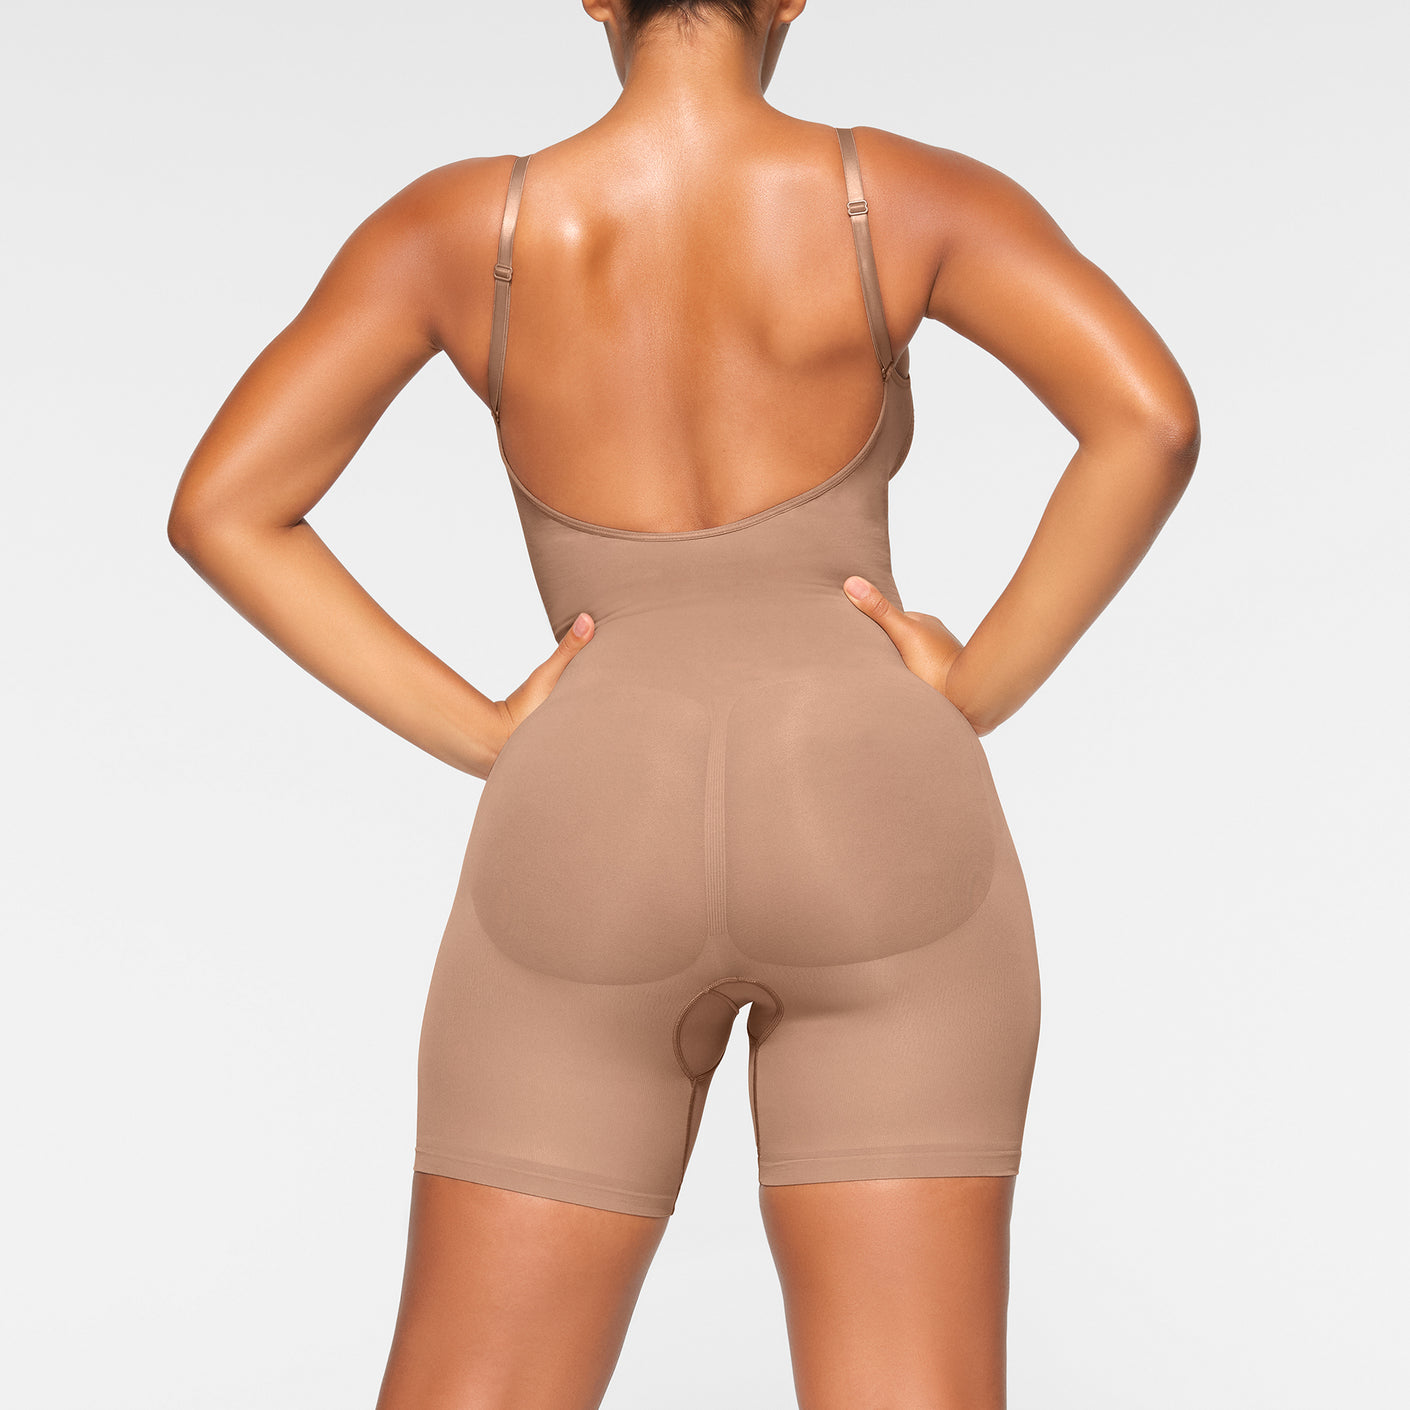 Seamless Skims shapewear bodysuit - Full body front and back